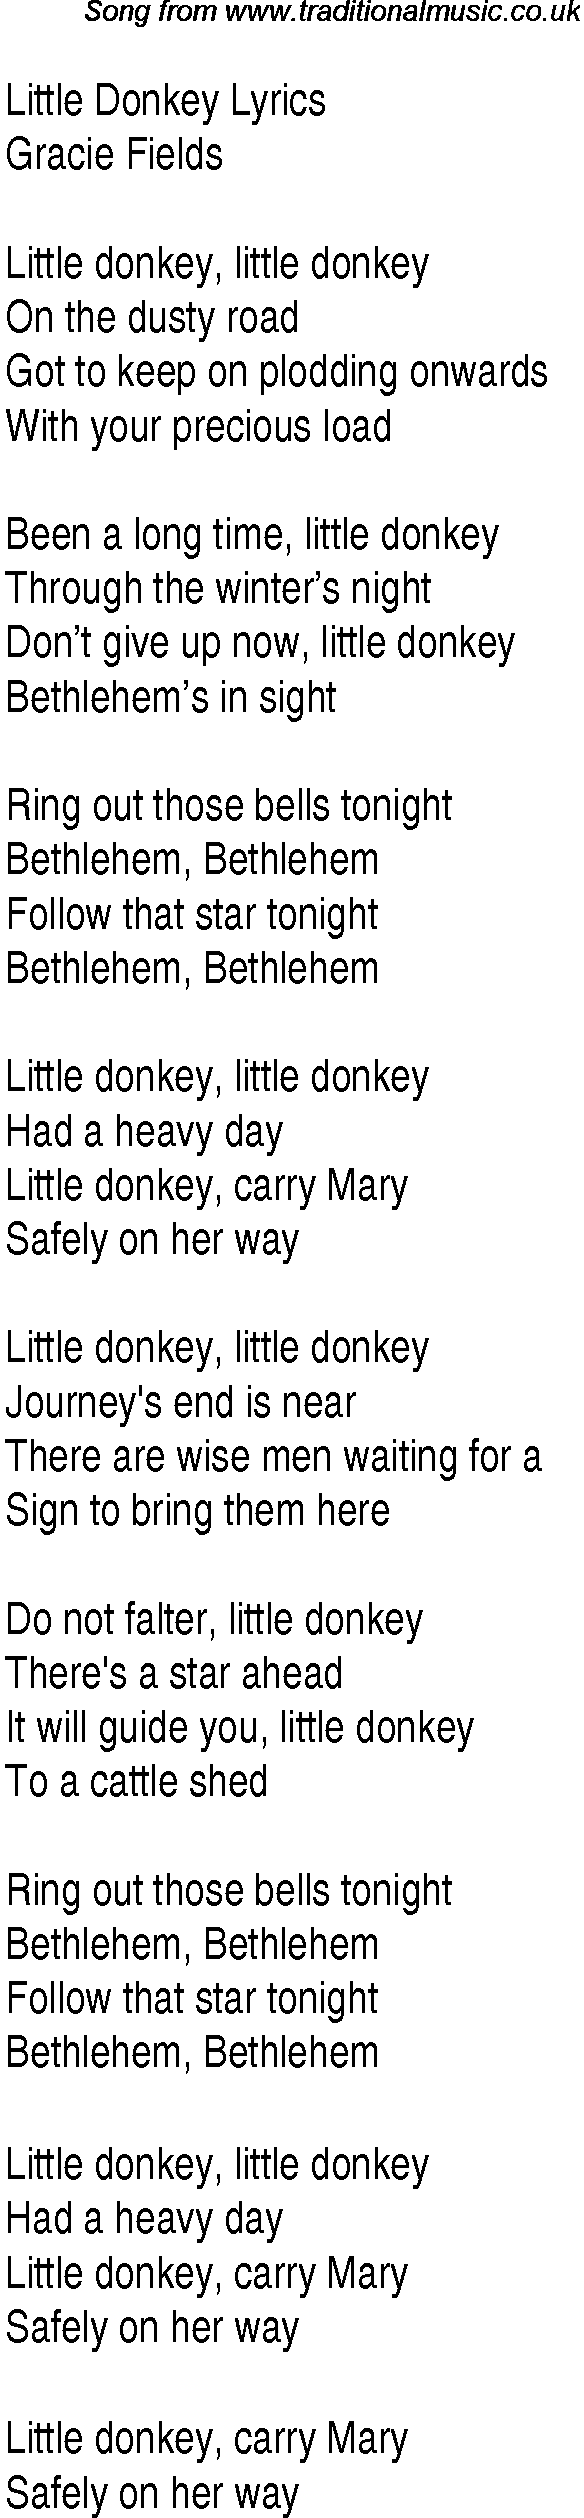 1940s top songs - lyrics for Little Donkey(Gracie Fields)